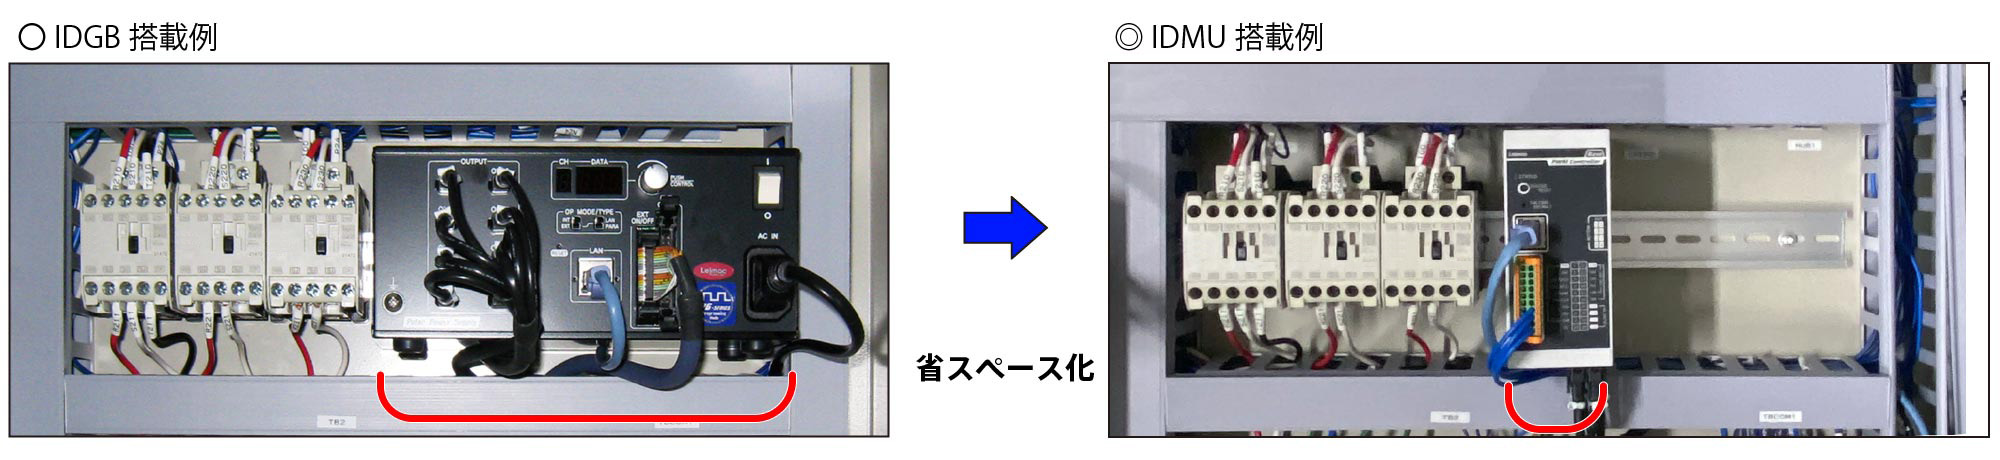 IDMU Product Description 02